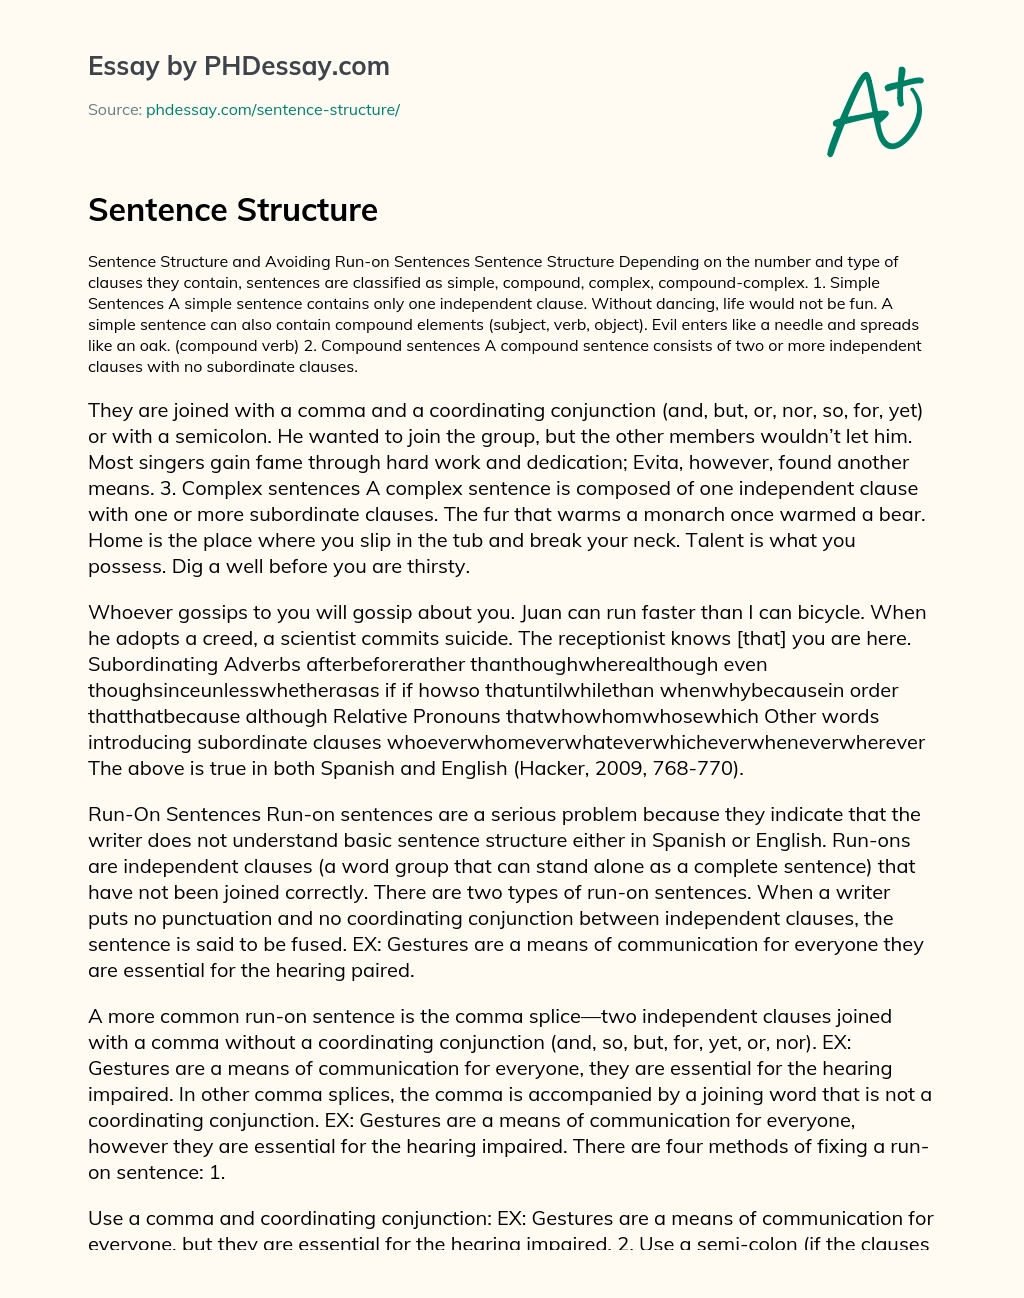 Sentence Structure essay